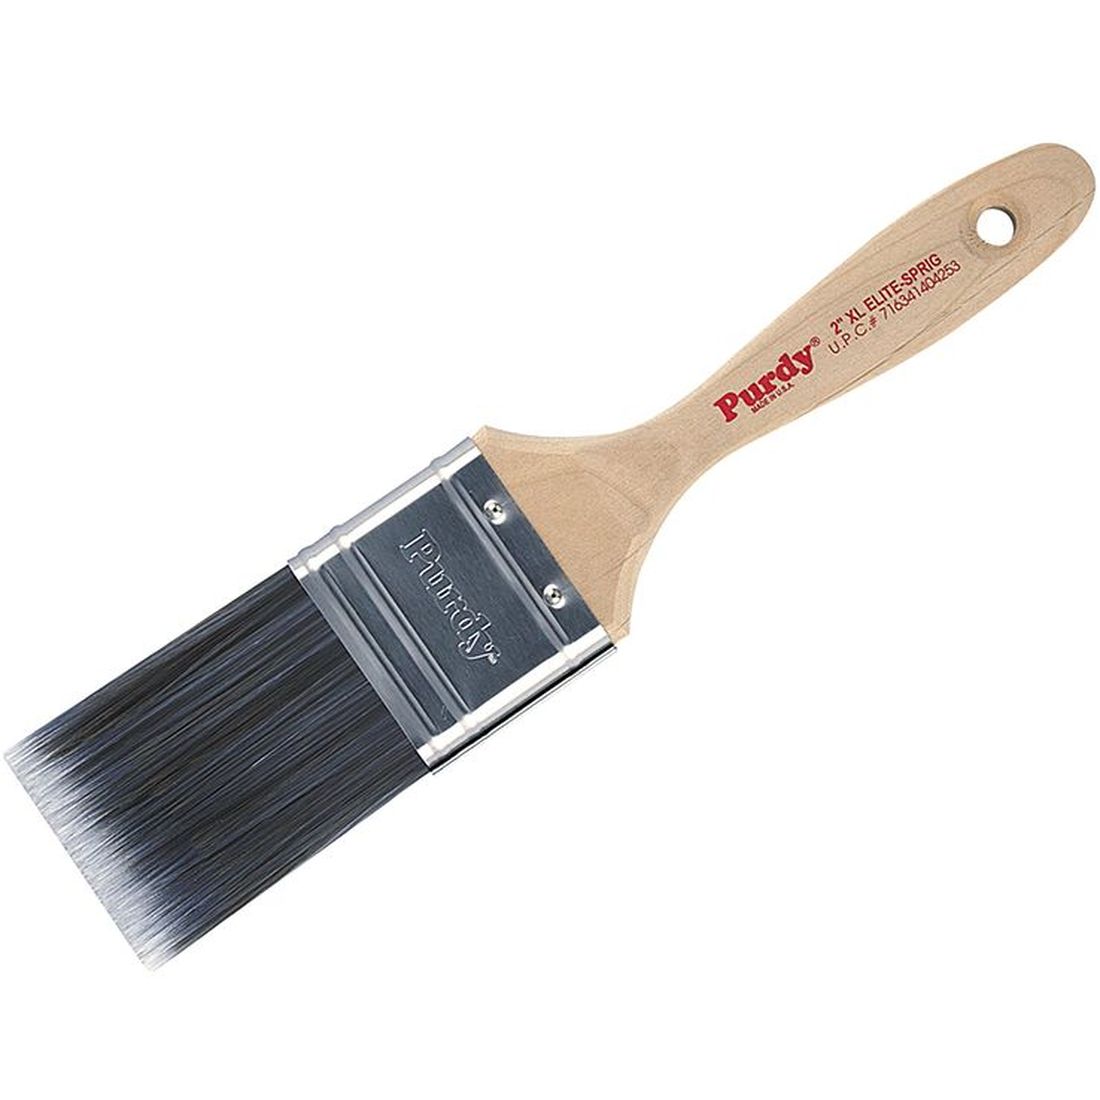 Purdy XL Elite Sprig Paint Brush 2in 